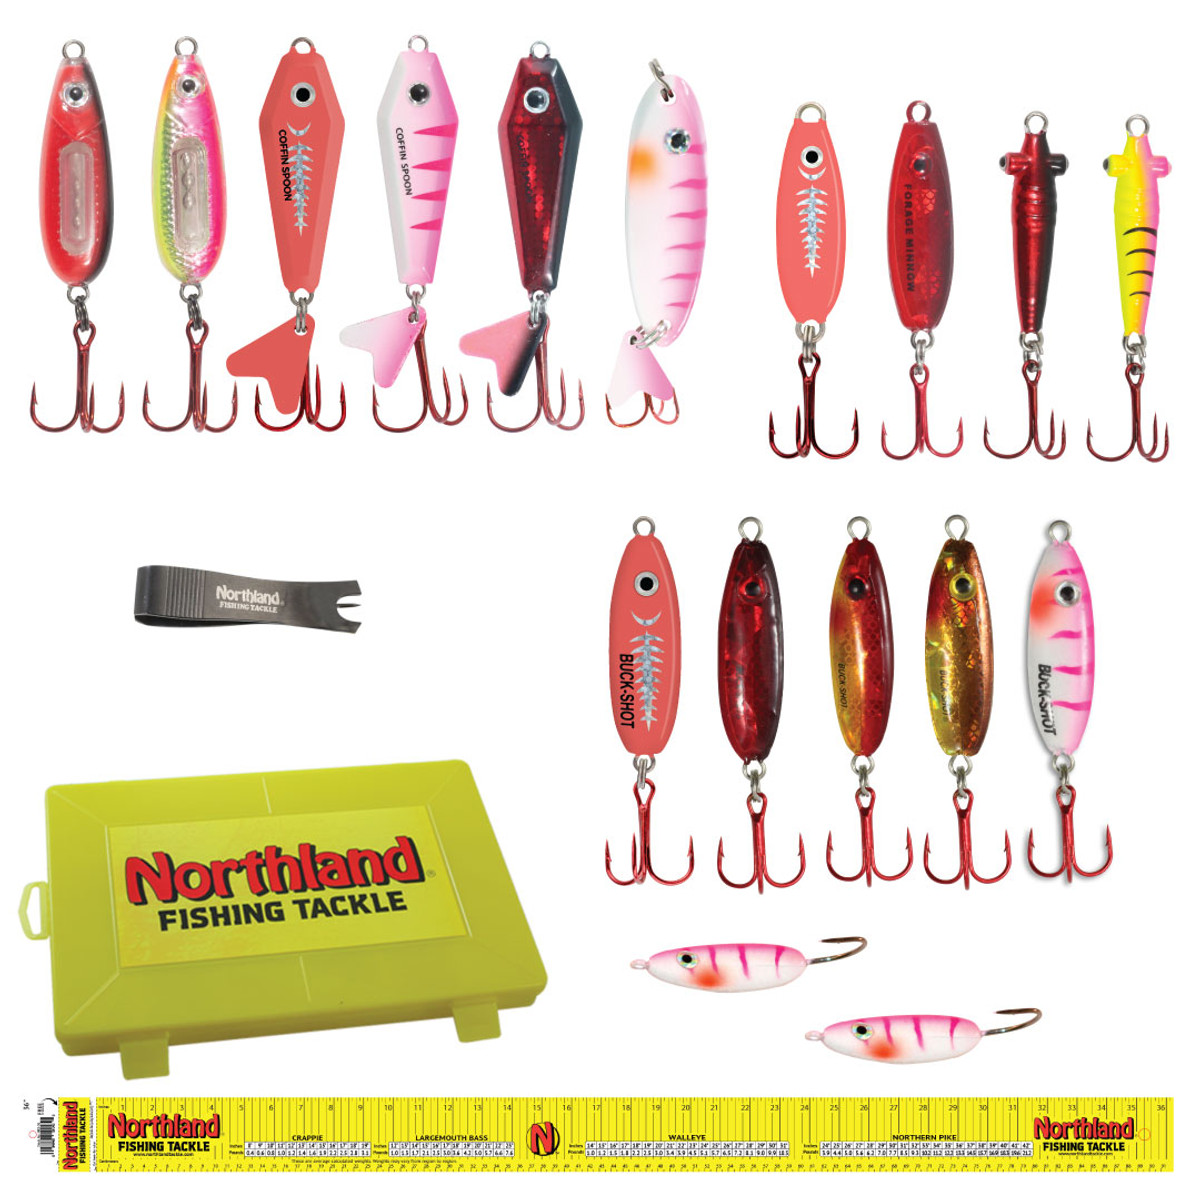 25pcs Metal Spoon Fishing Lure Kit With Free Fishing Tackle Box